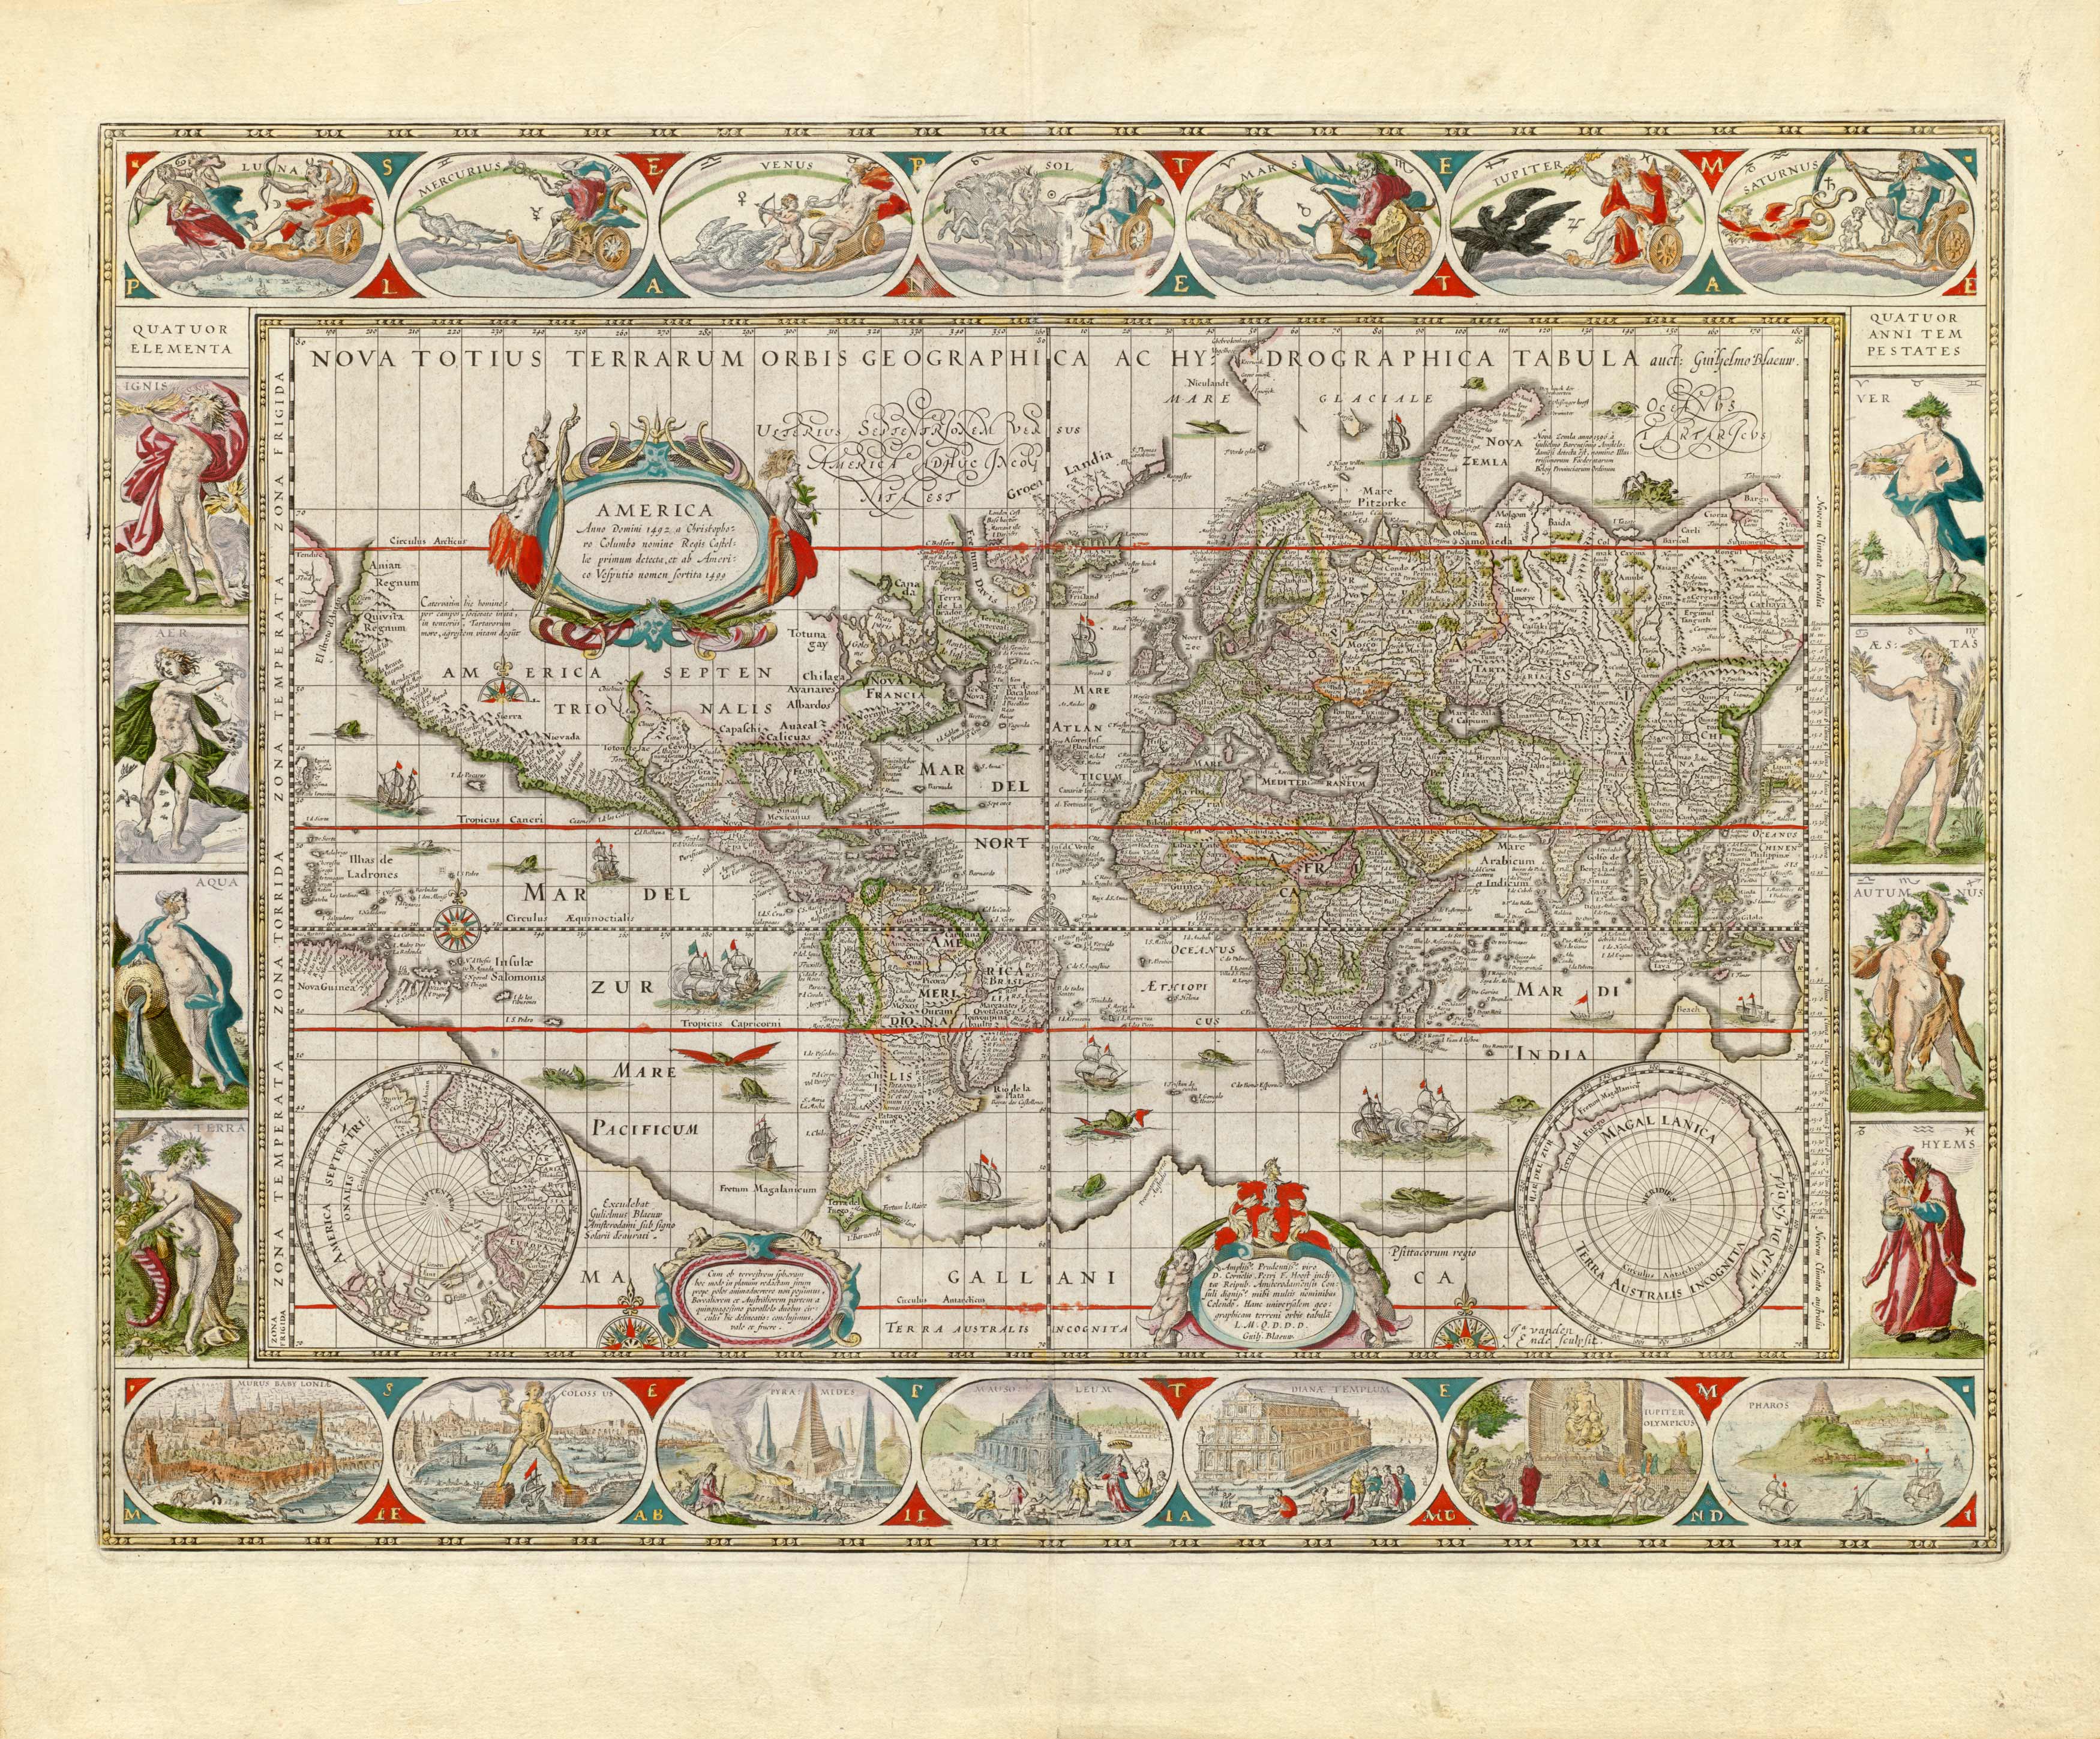 Nova Totius Terrarum Orbis Geographica ac Hydrographica Tabula (The